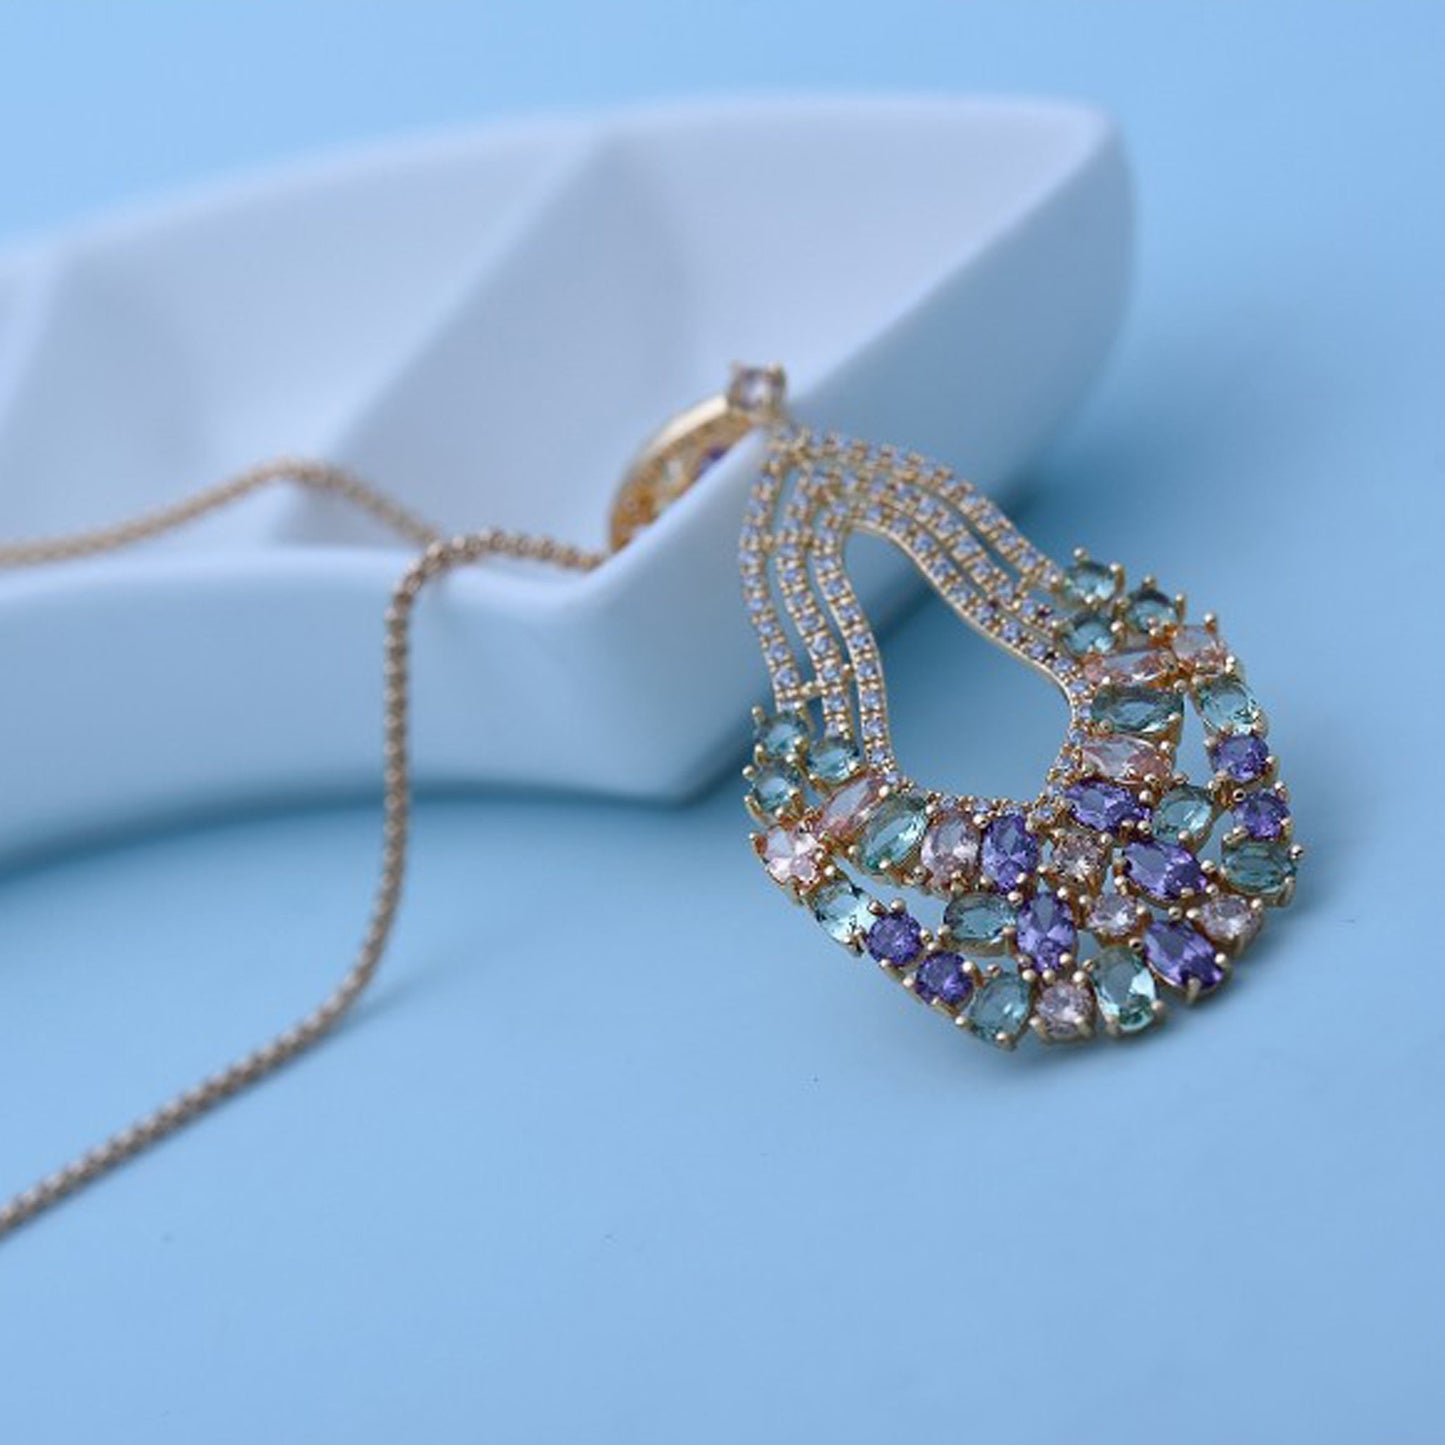 Jetta Pendant - Kuberlo - Best Gift for - Imitation Jewellery - Designer Jewellery - one gram gold - fashion jewellery